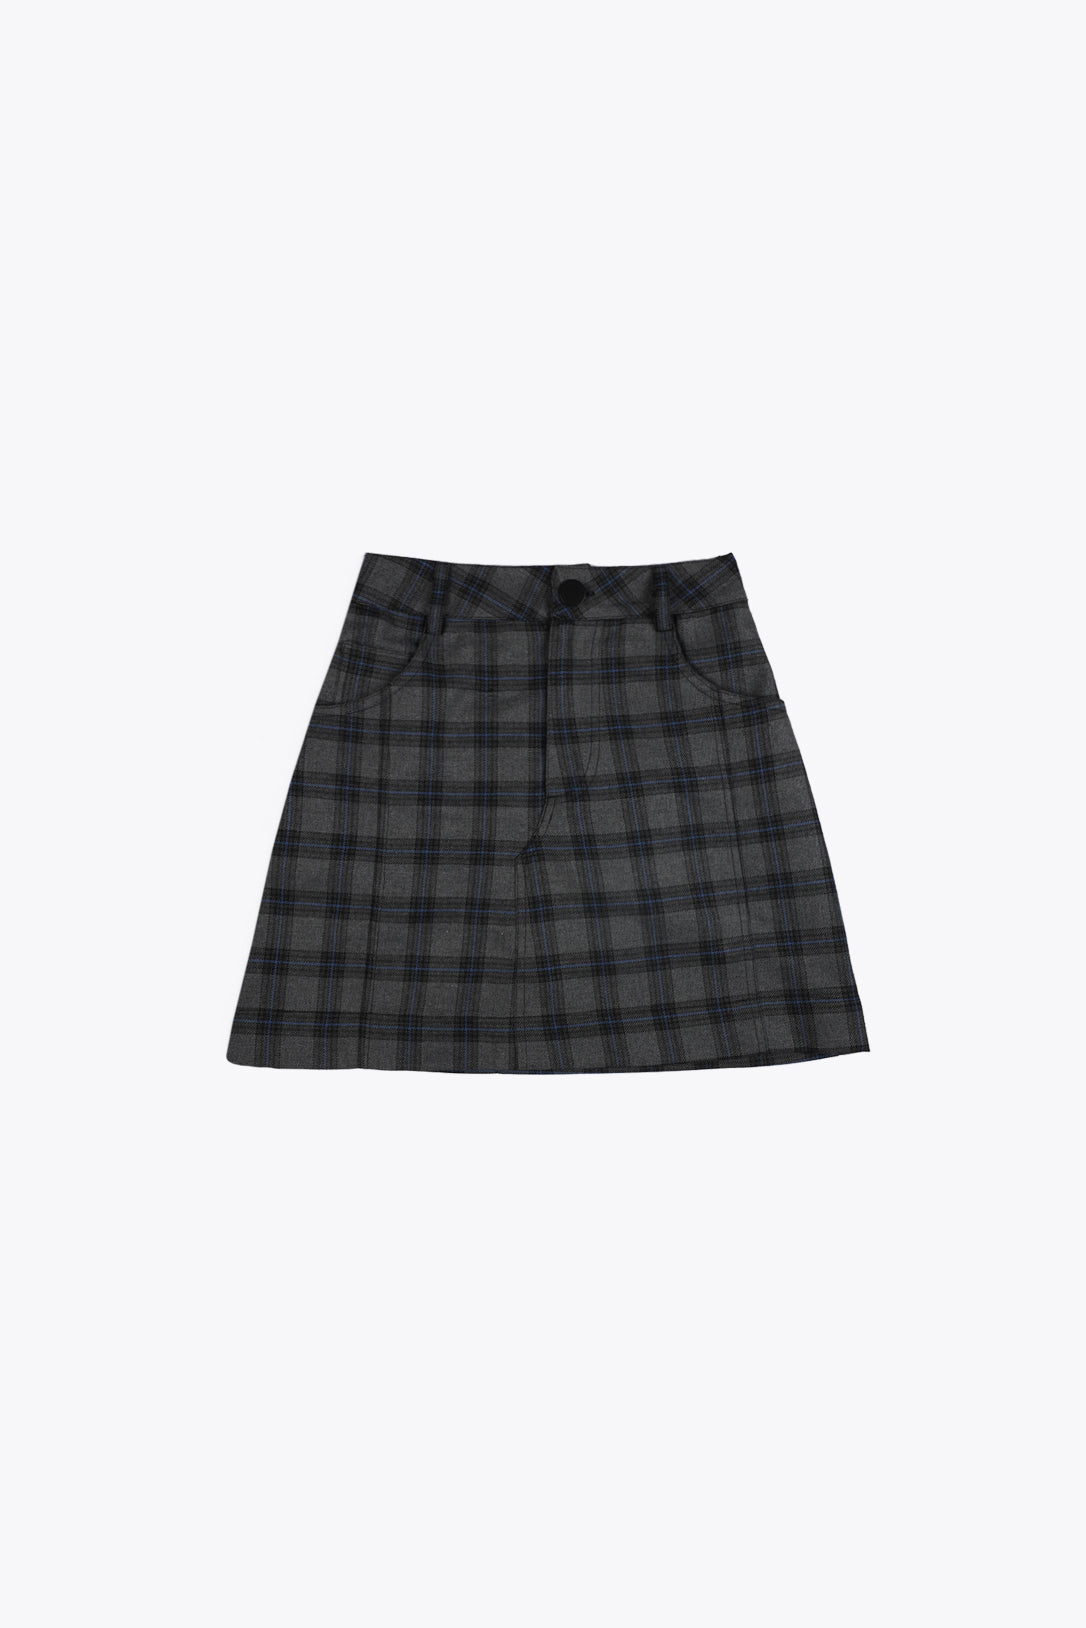 Details more than 159 plaid school skirt super hot